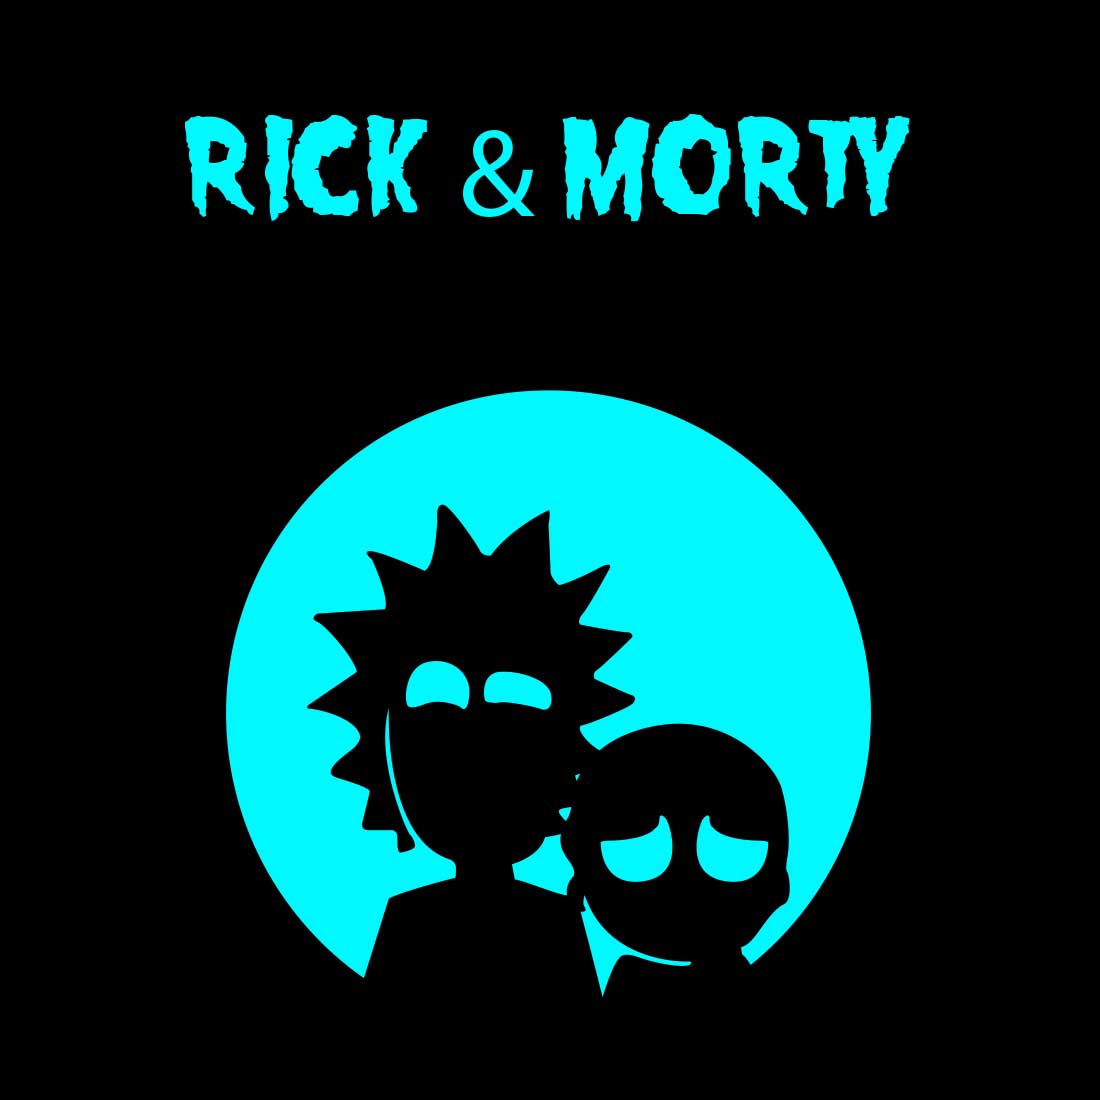 Rick And Morty Design Maroon Black Men T-Shirt